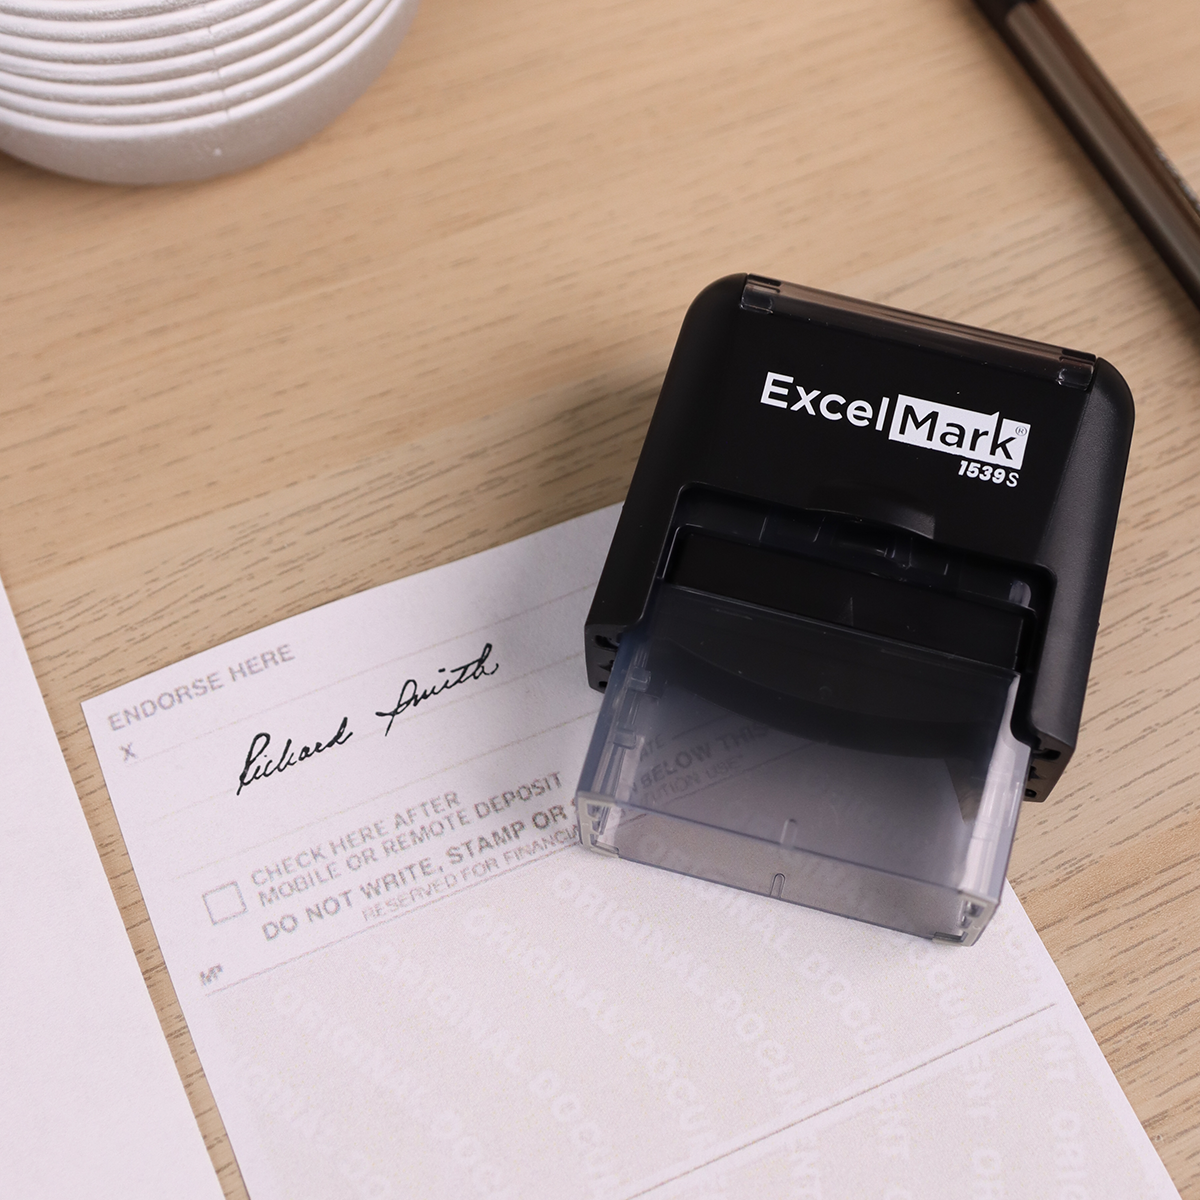 ExcelMark A4545 Ink Pad